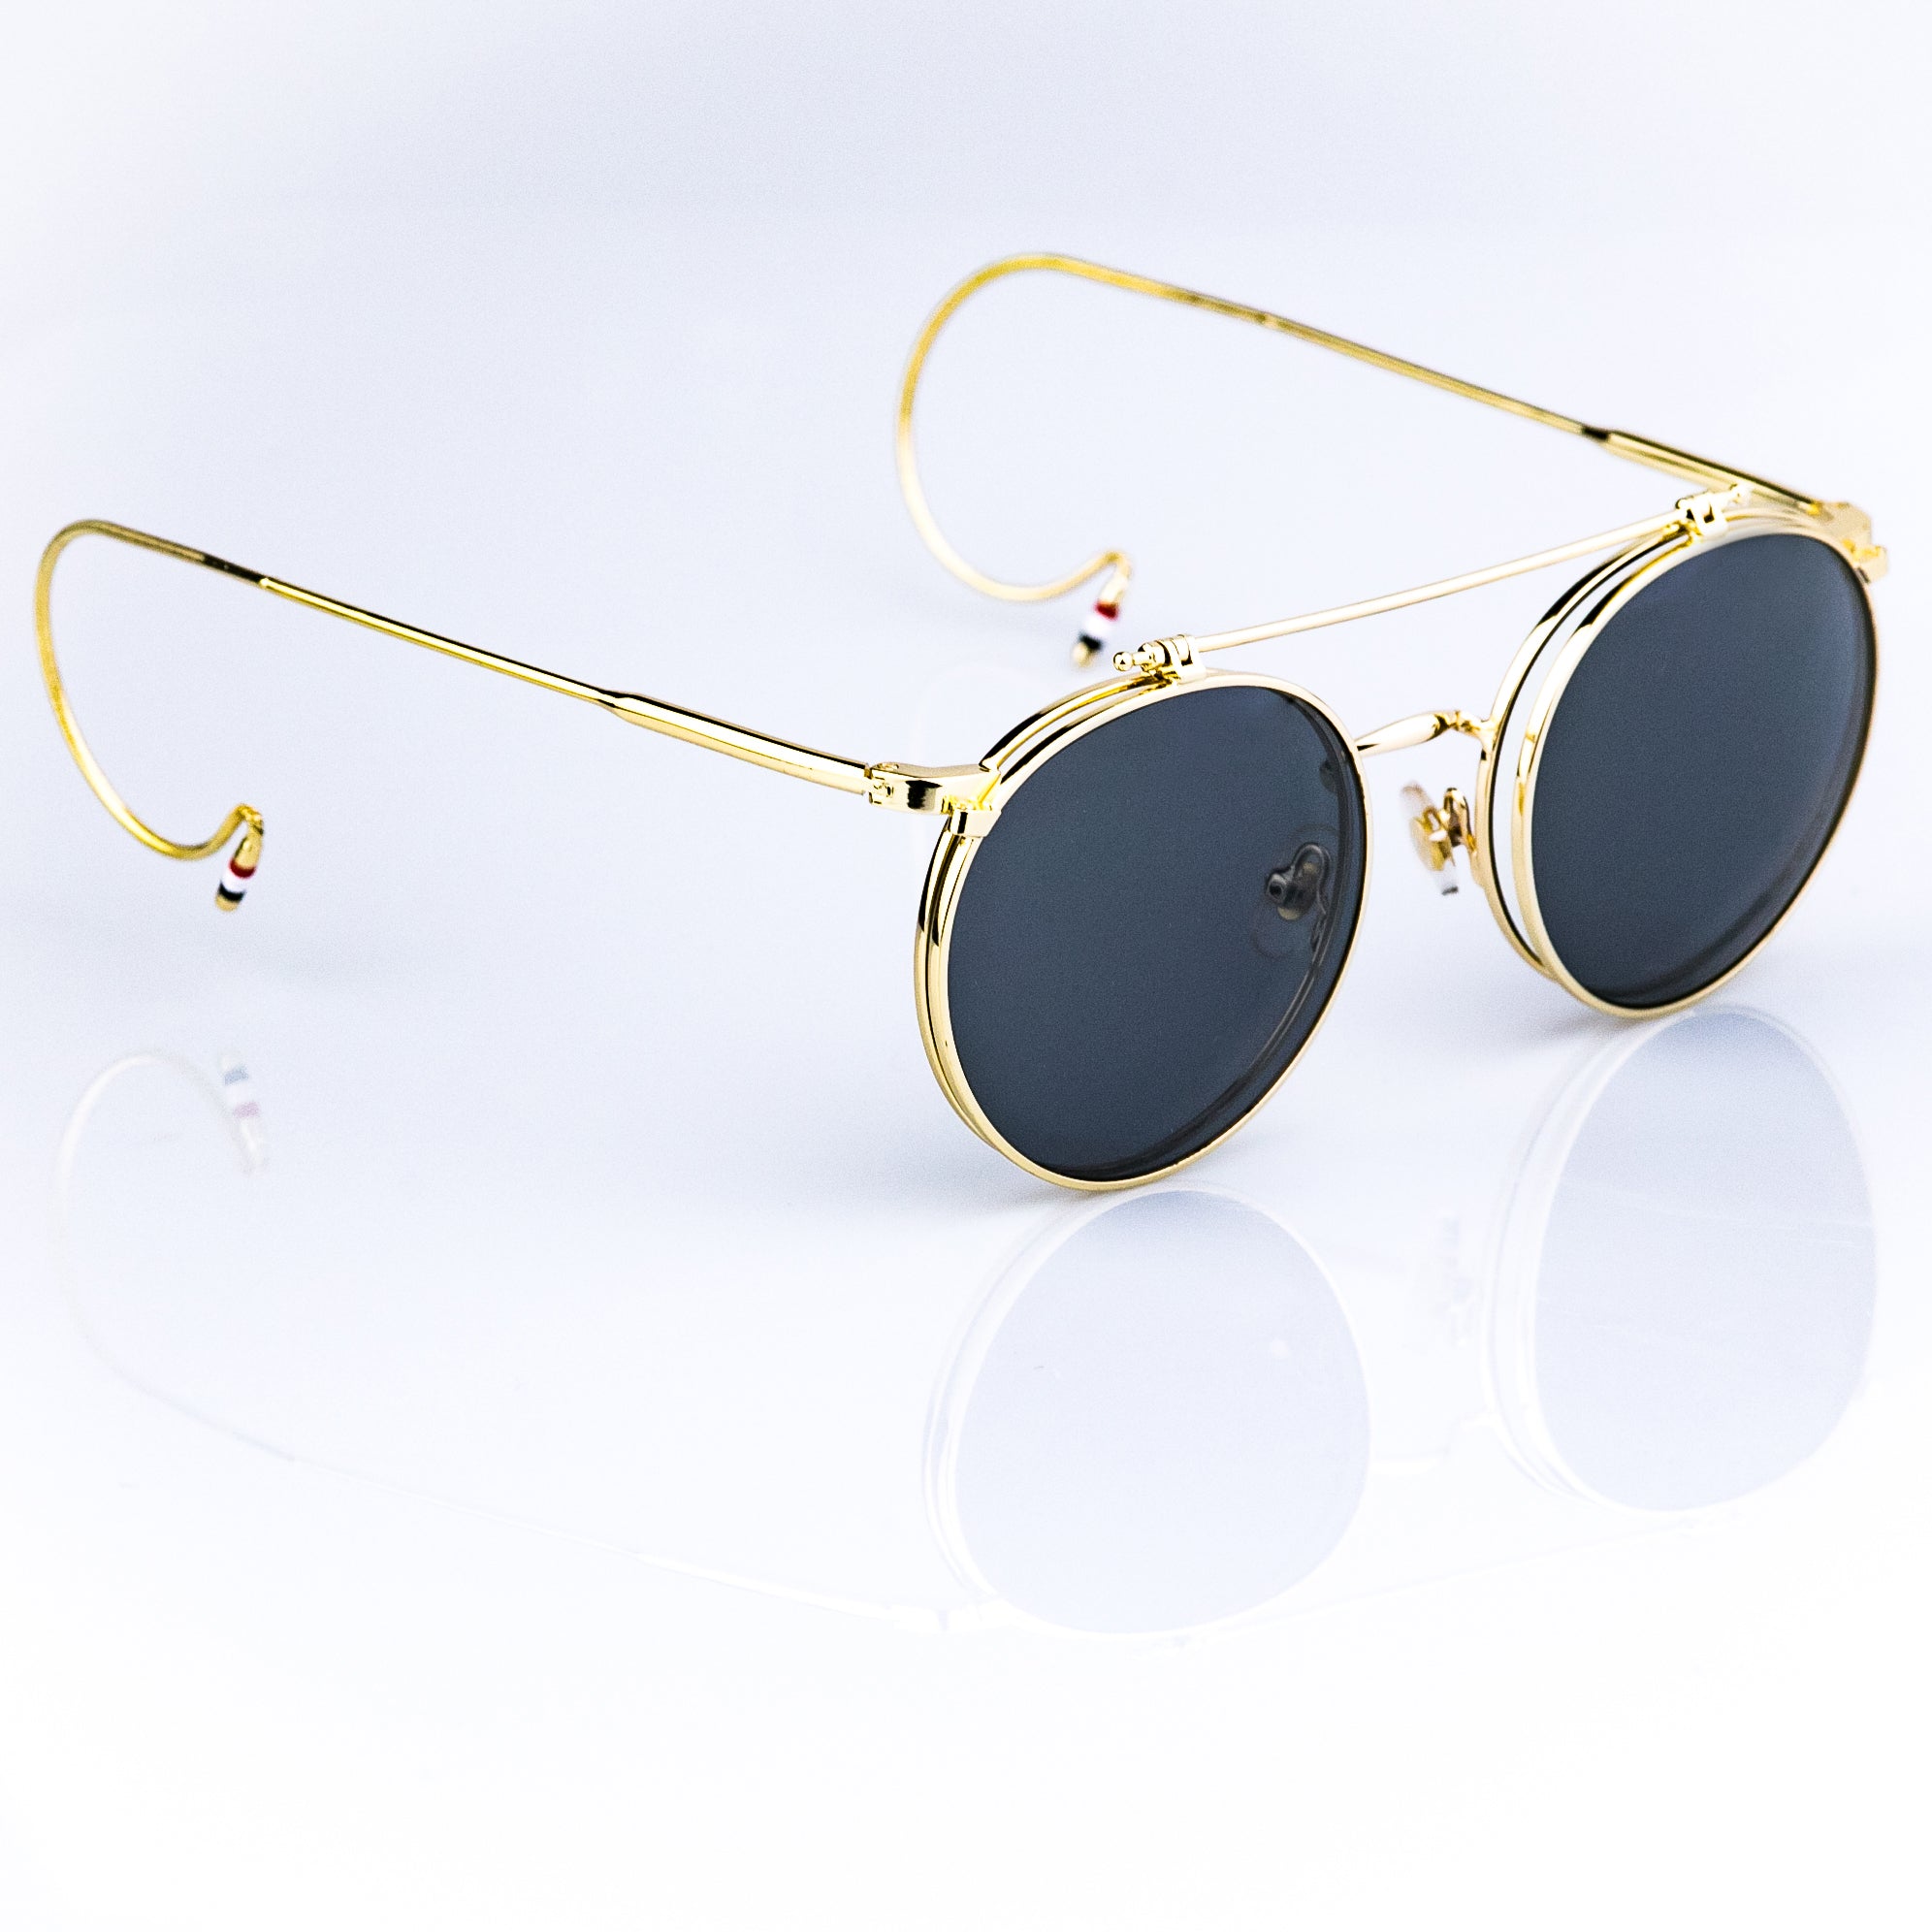 blad kaos tyran Hipster Sunglasses - Maxi Corolla - Gold Unisex Frame - Clear-Black Lens -  Hipster Sunnies